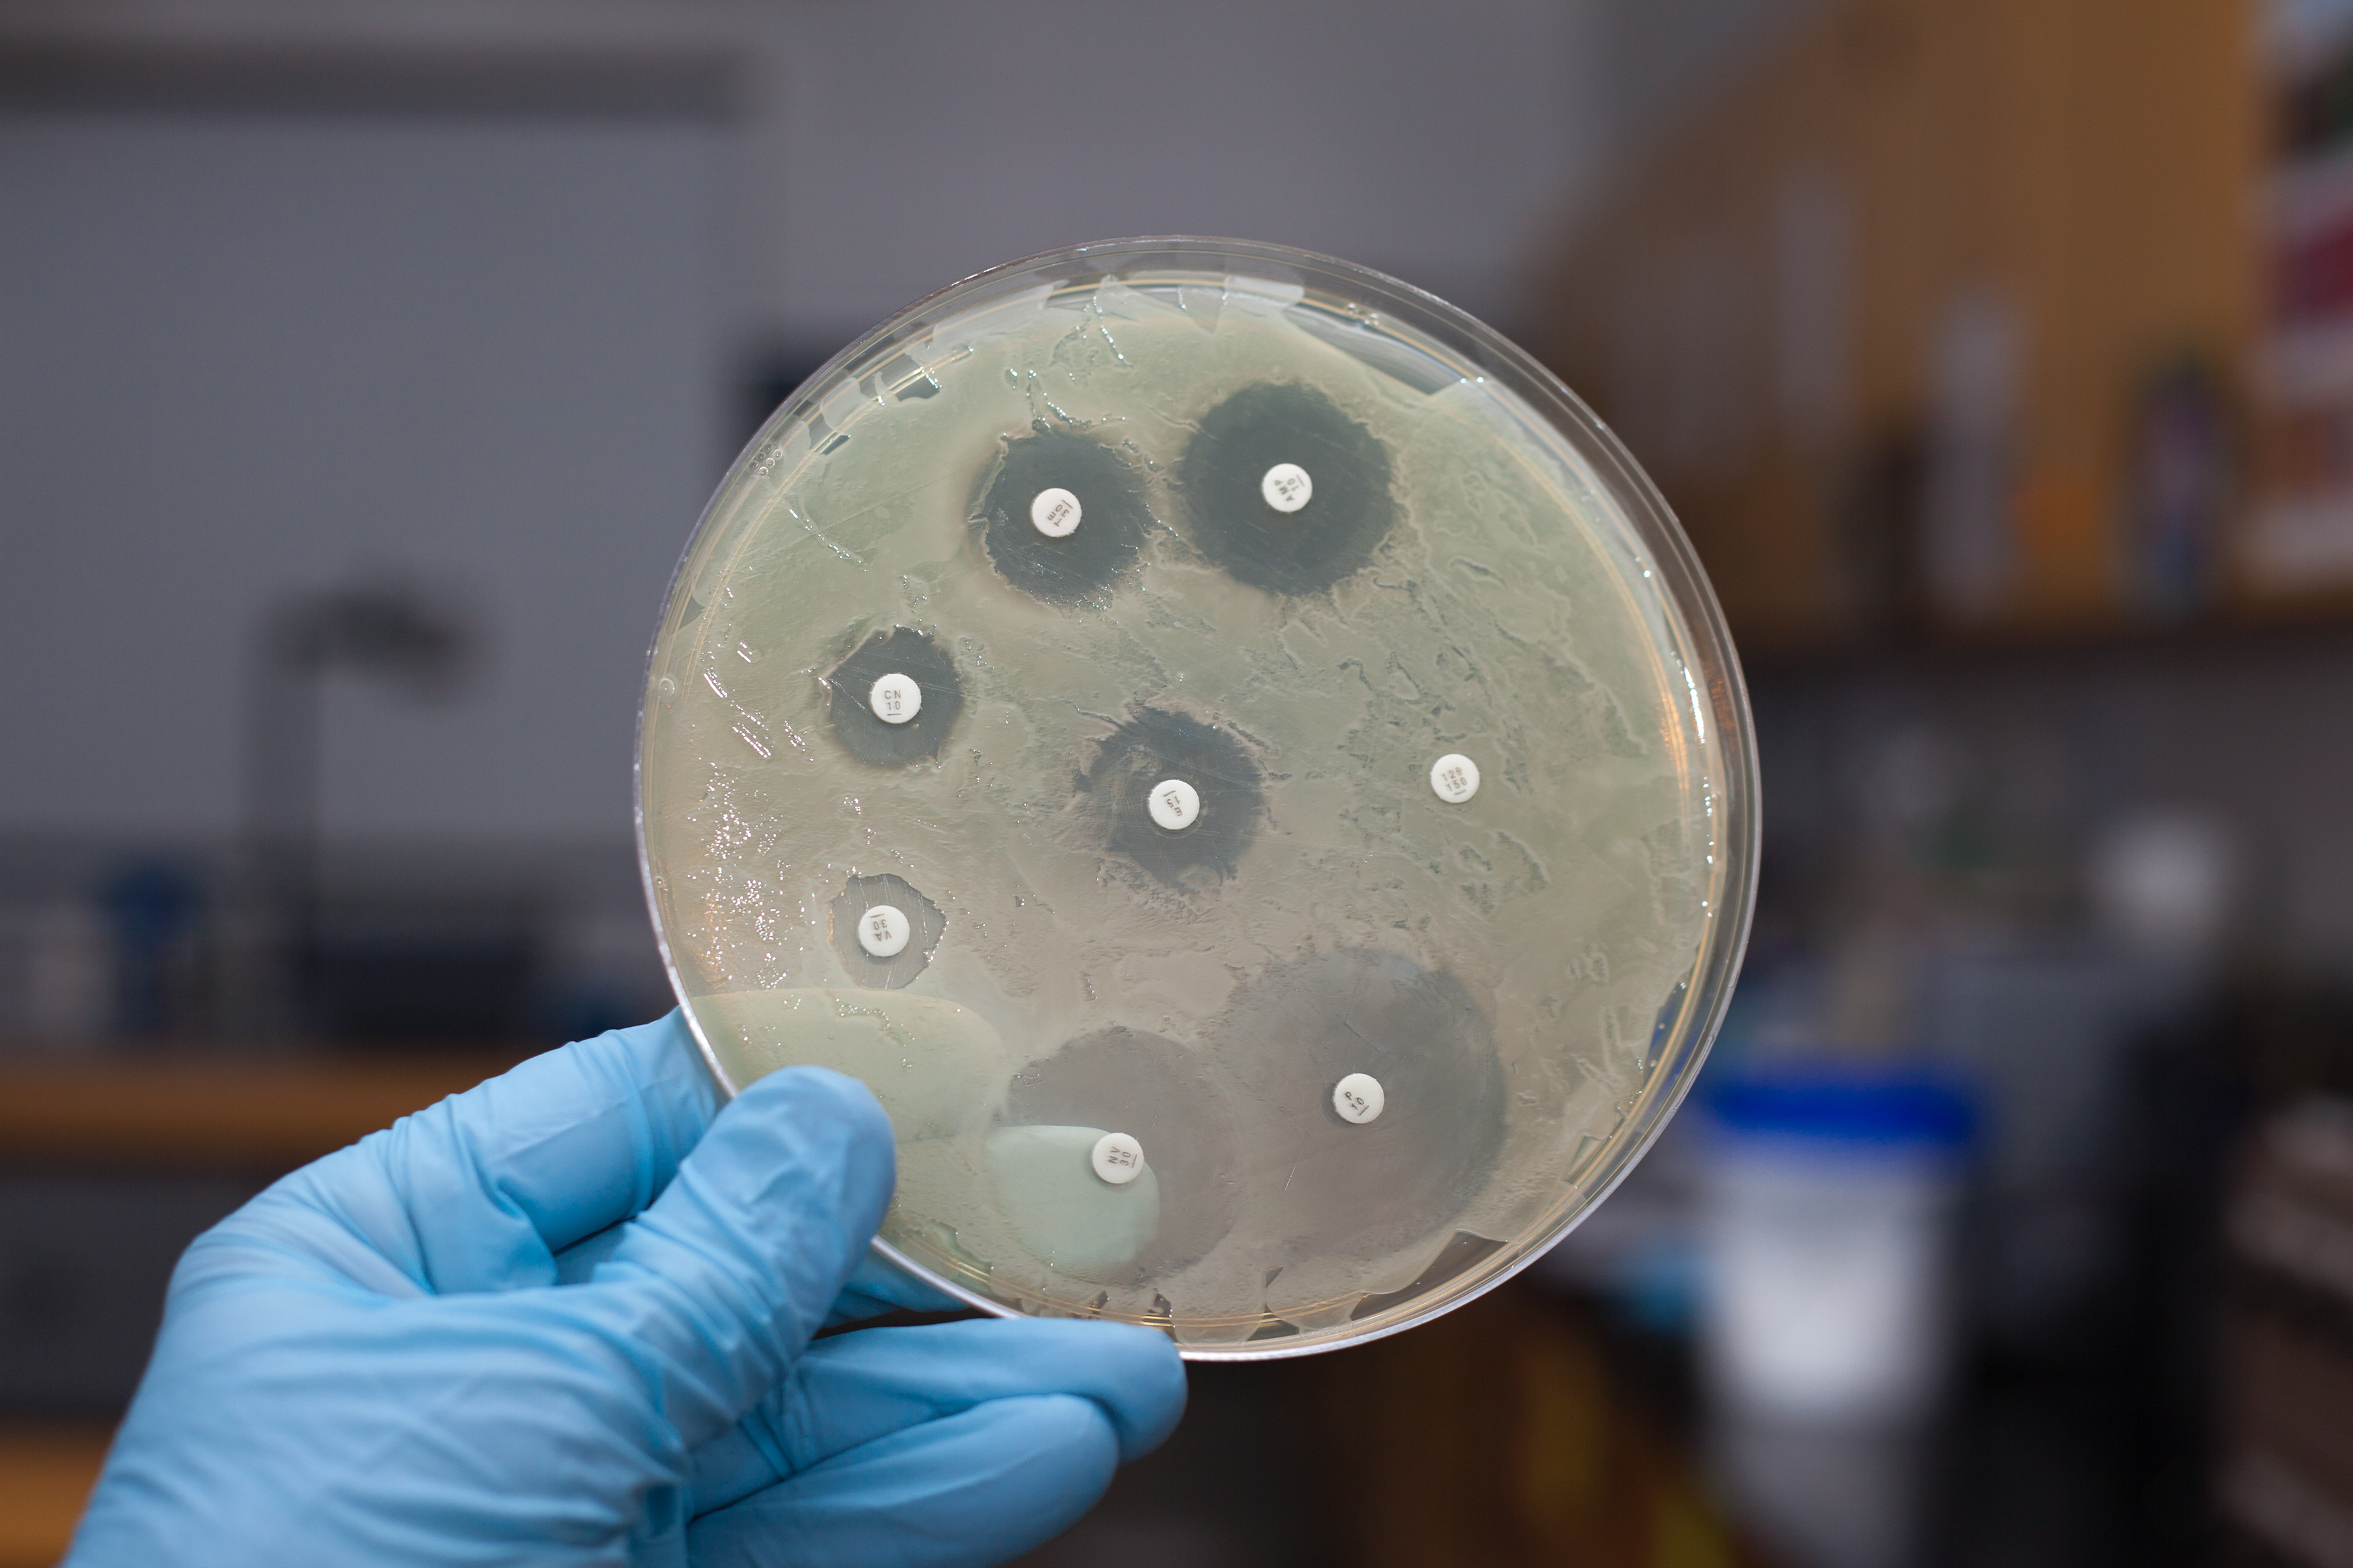 LpxH targeting antibiotics for Gram-negative bacteria